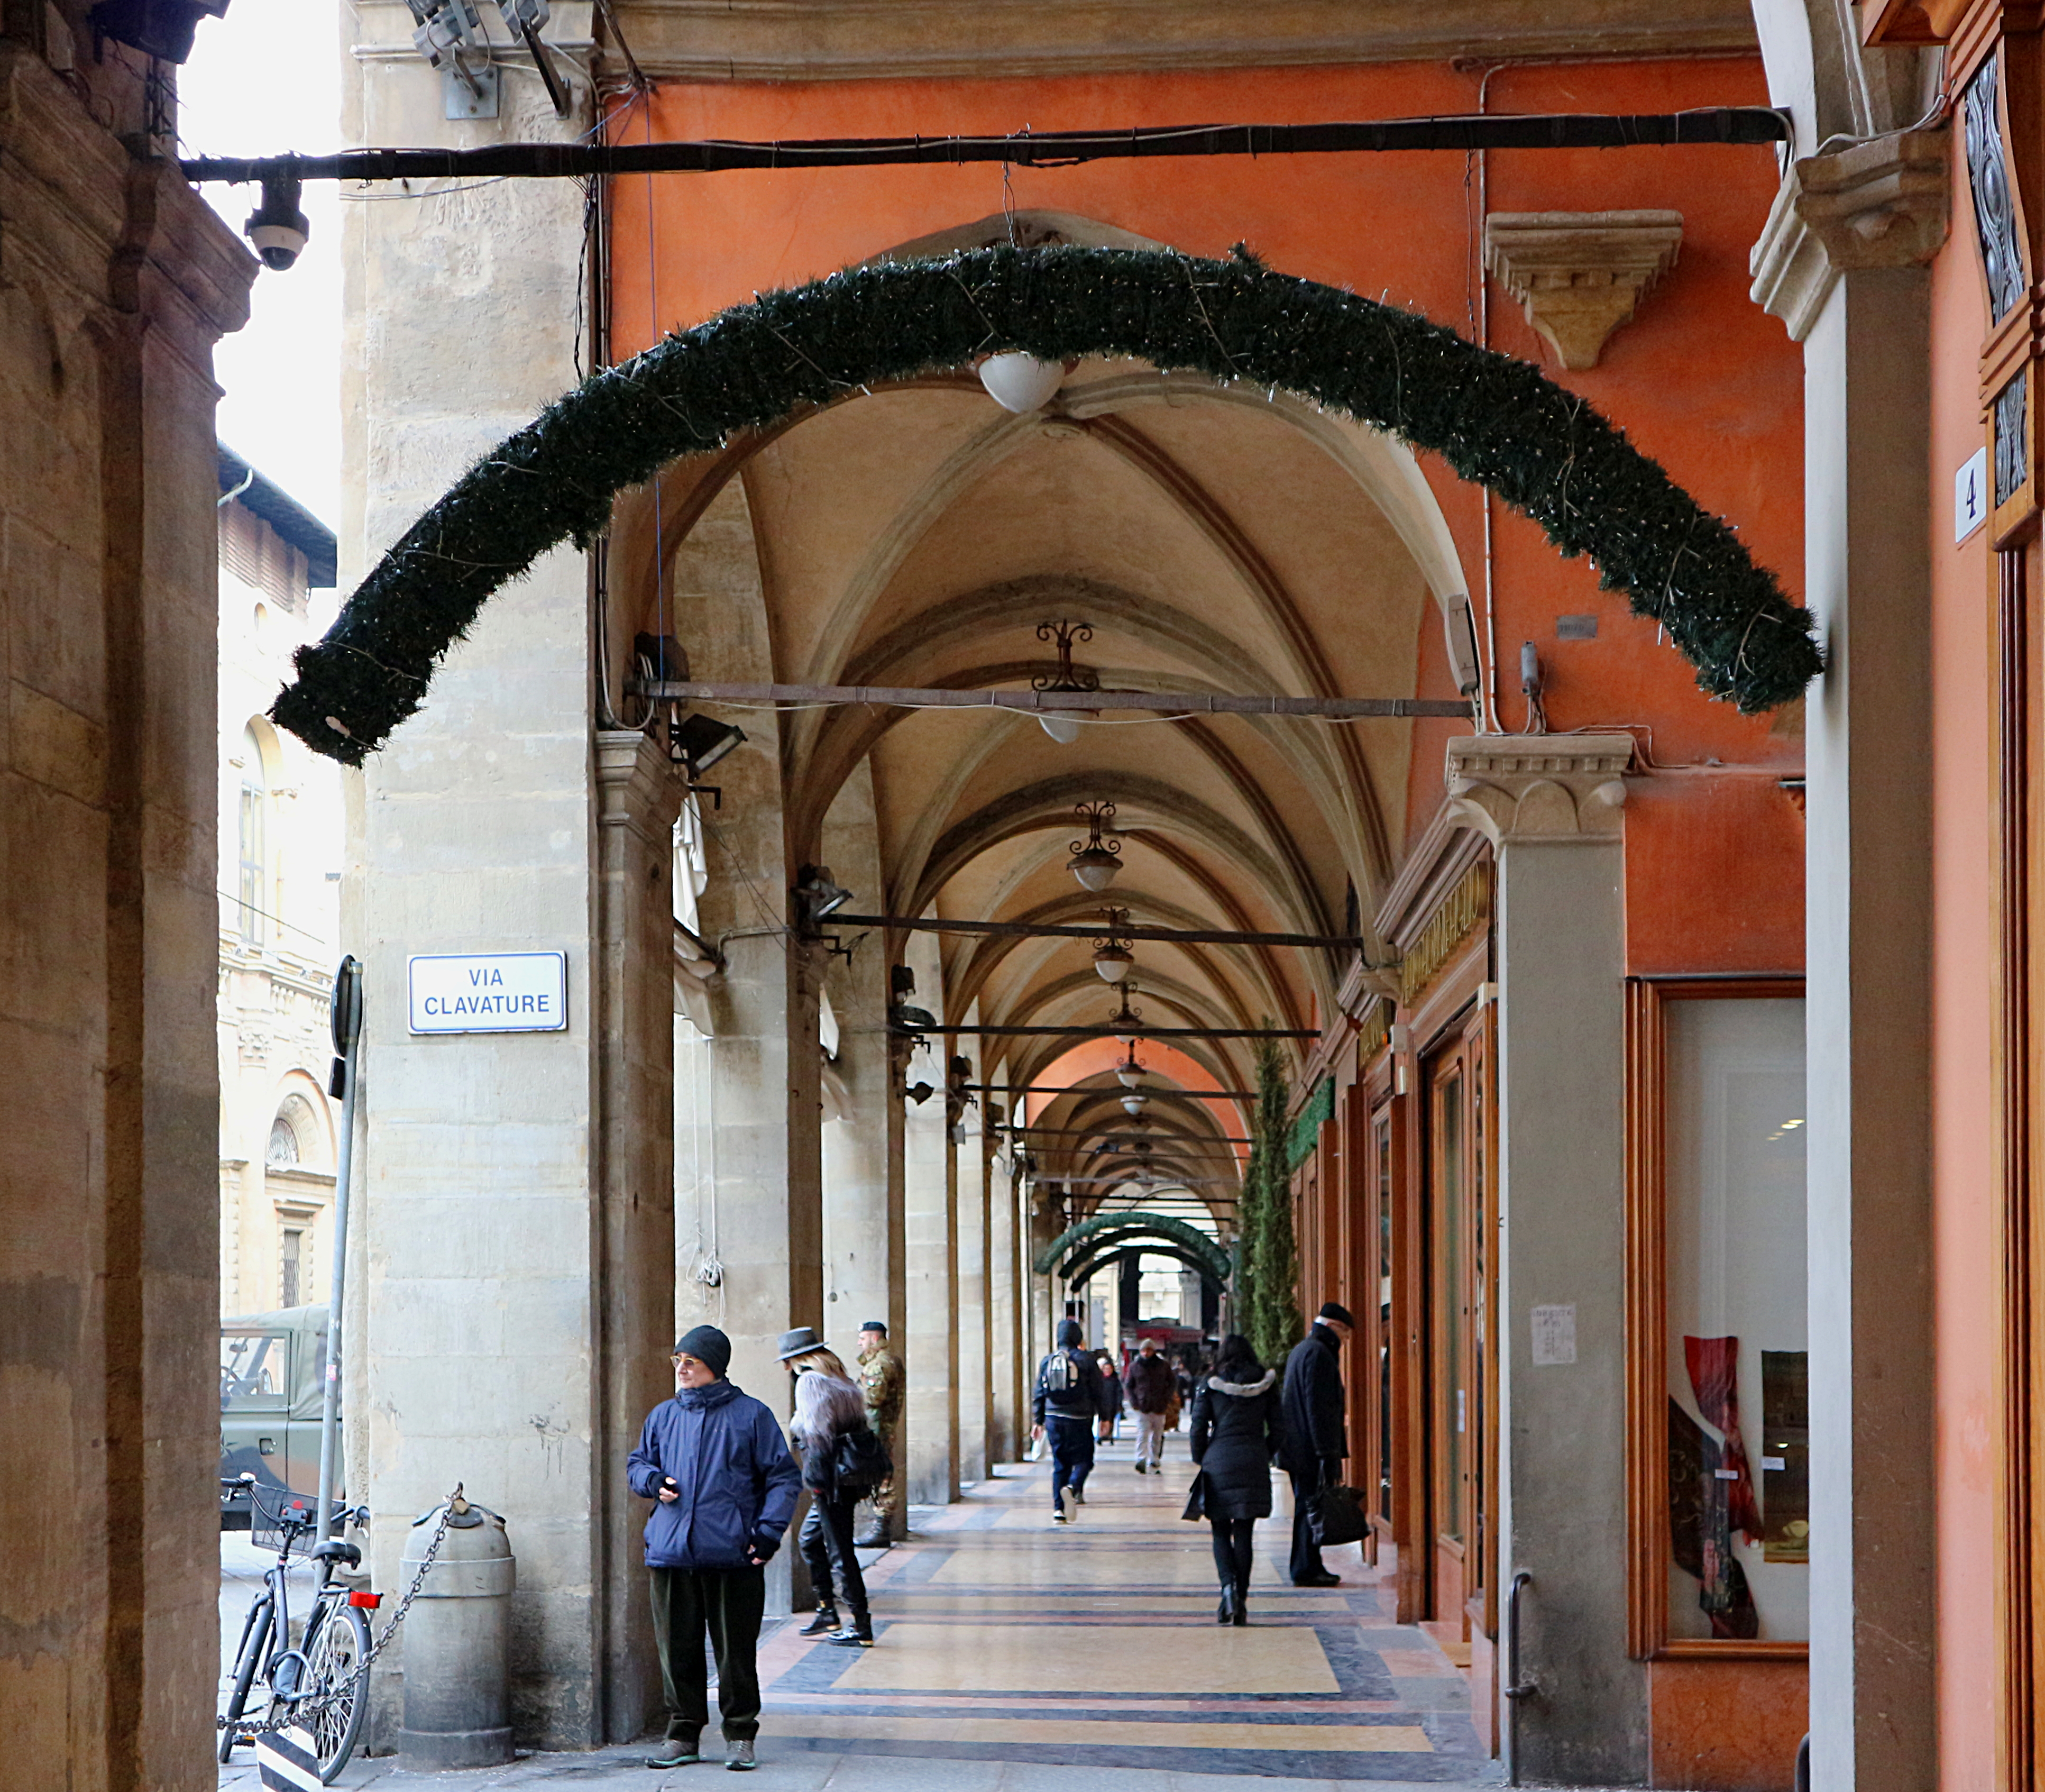 foto: https://upload.wikimedia.org/wikipedia/commons/8/83/Piazza_maggiore_005.jpg